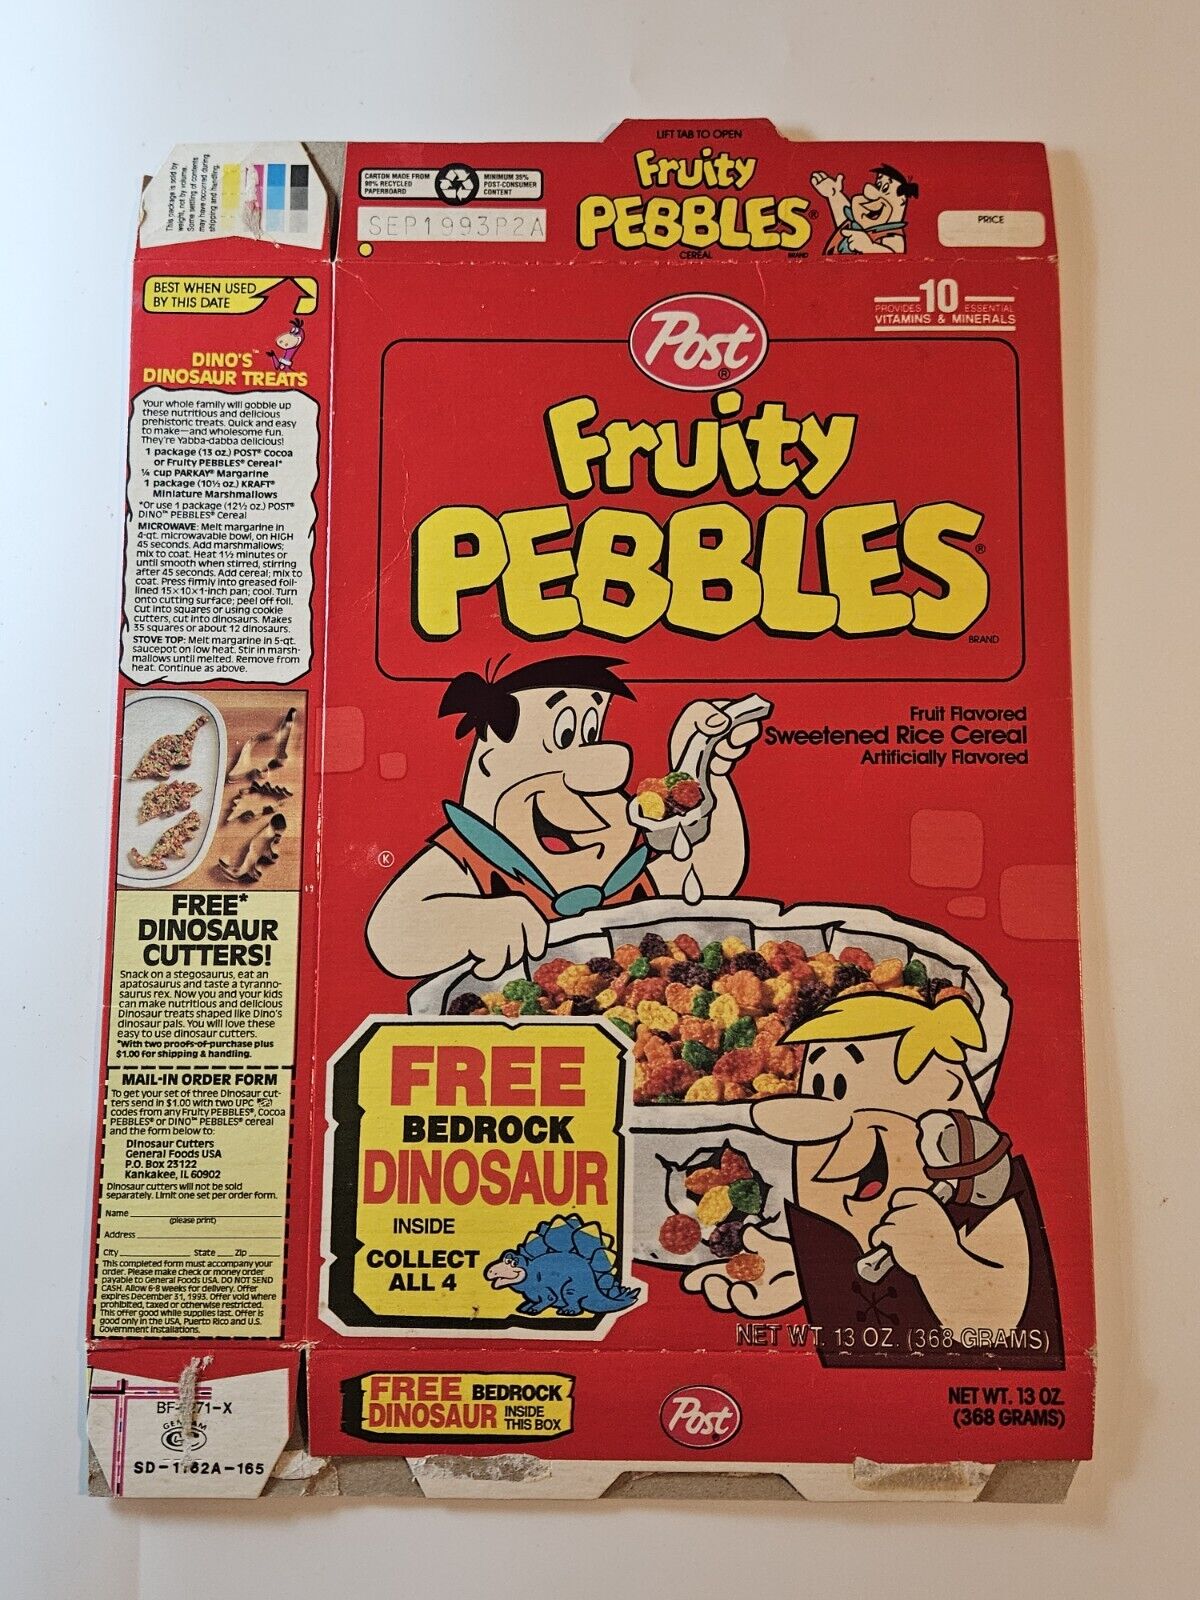 1993 POST FRUITY PEBBLES Empty CEREAL BOX Flat Bedrock Dinosaur Toy Promo